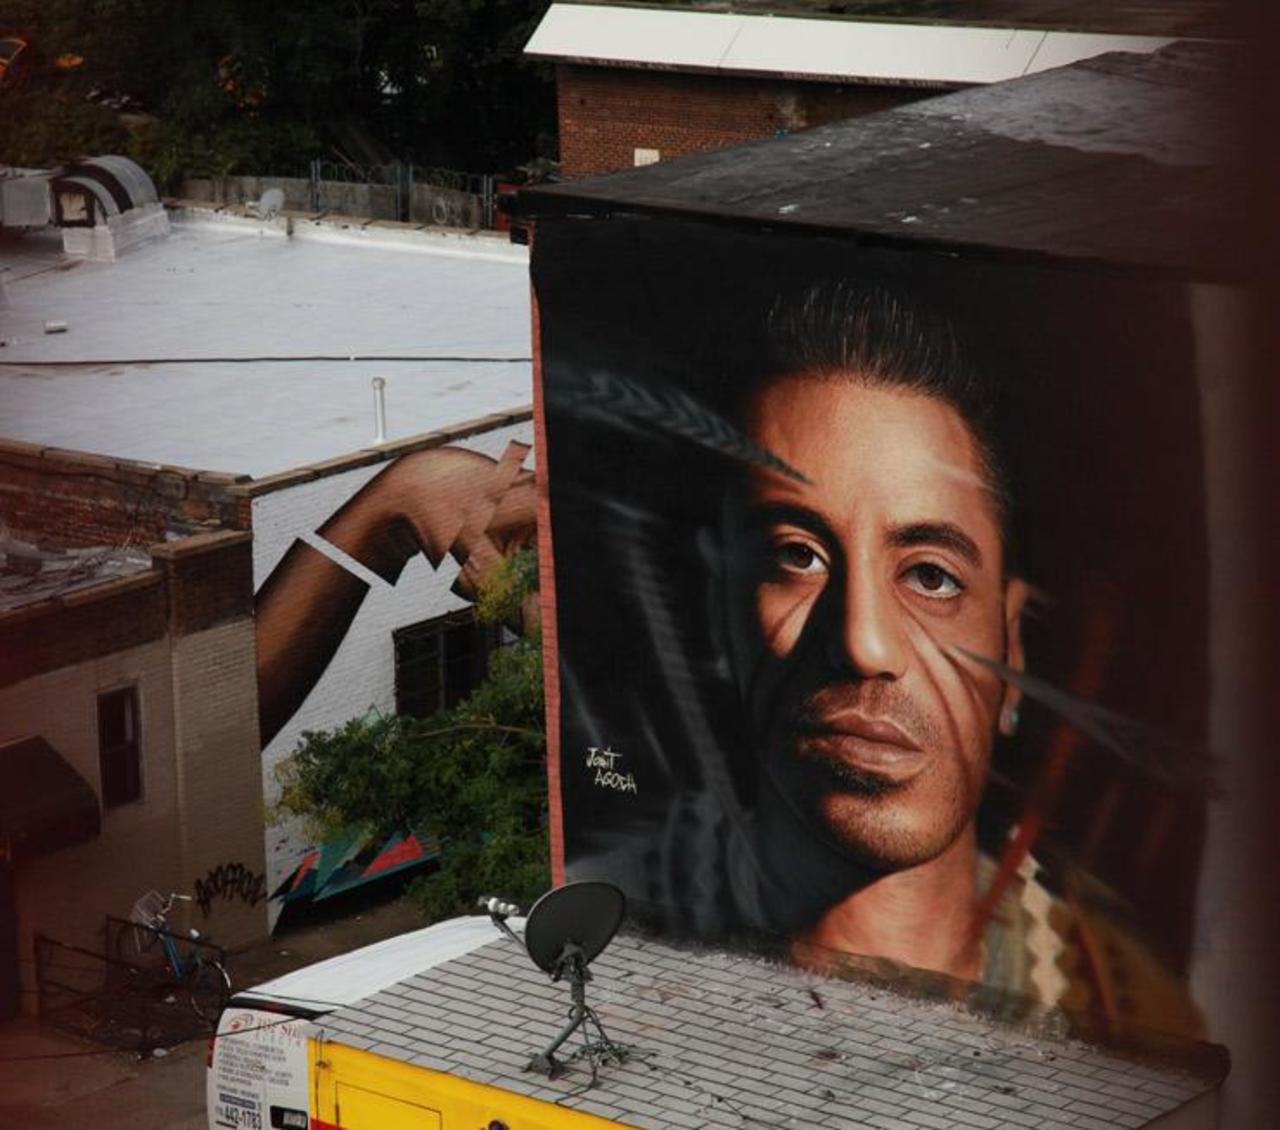 BSA | Images Of The Week: 10.11.15
http://www.brooklynstreetart.com/theblog/2015/10/11/bsa-images-of-the-week-10-11-15/
#streetart #urbanart #graffiti http://t.co/UVzVLrllTJ